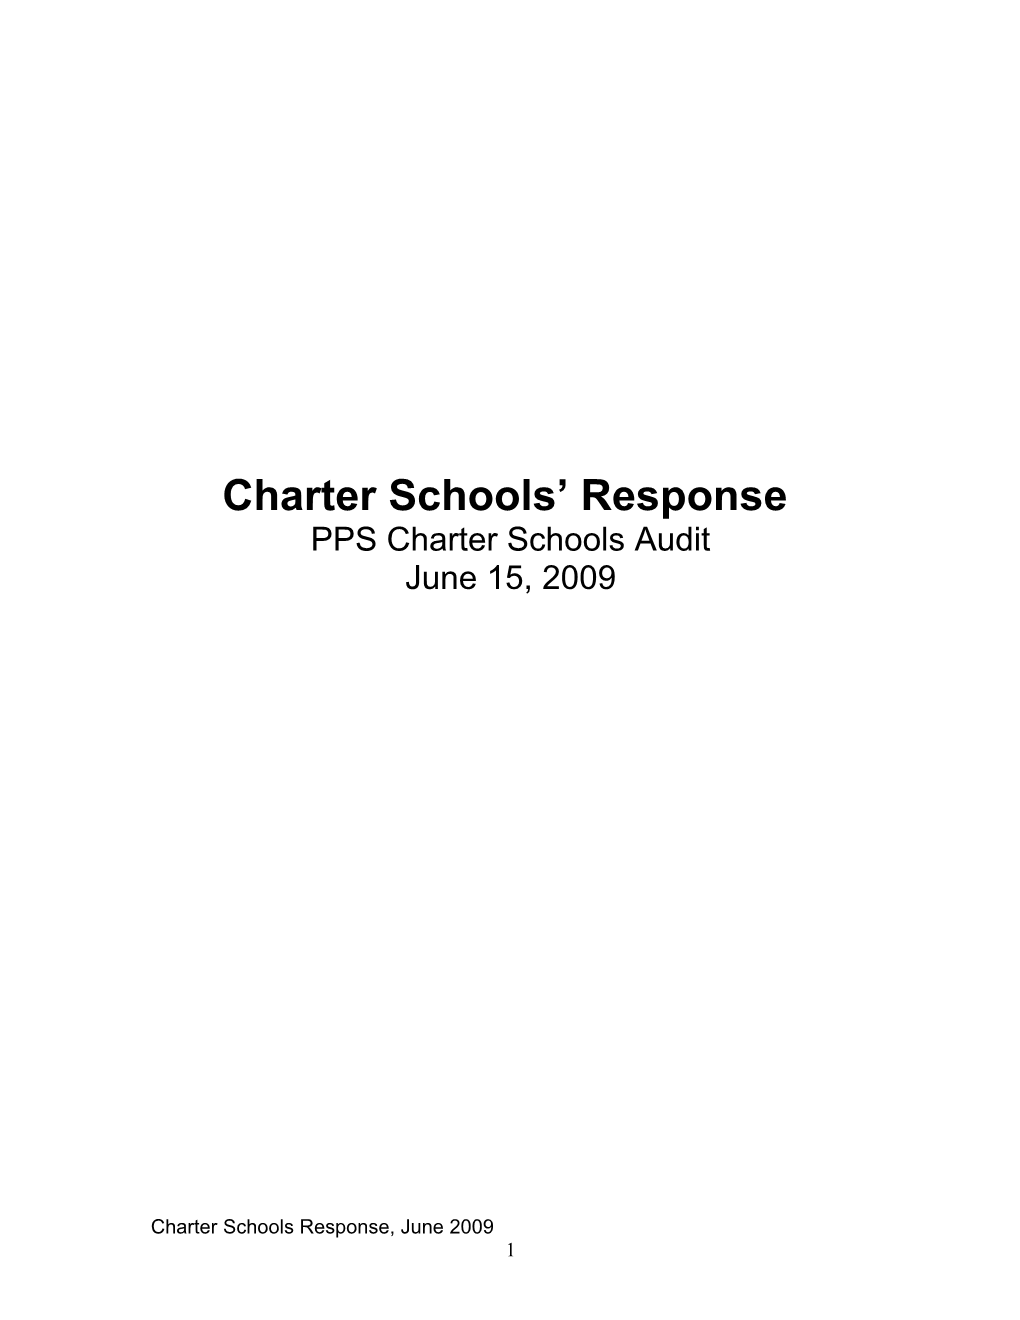 Charter Schools Response